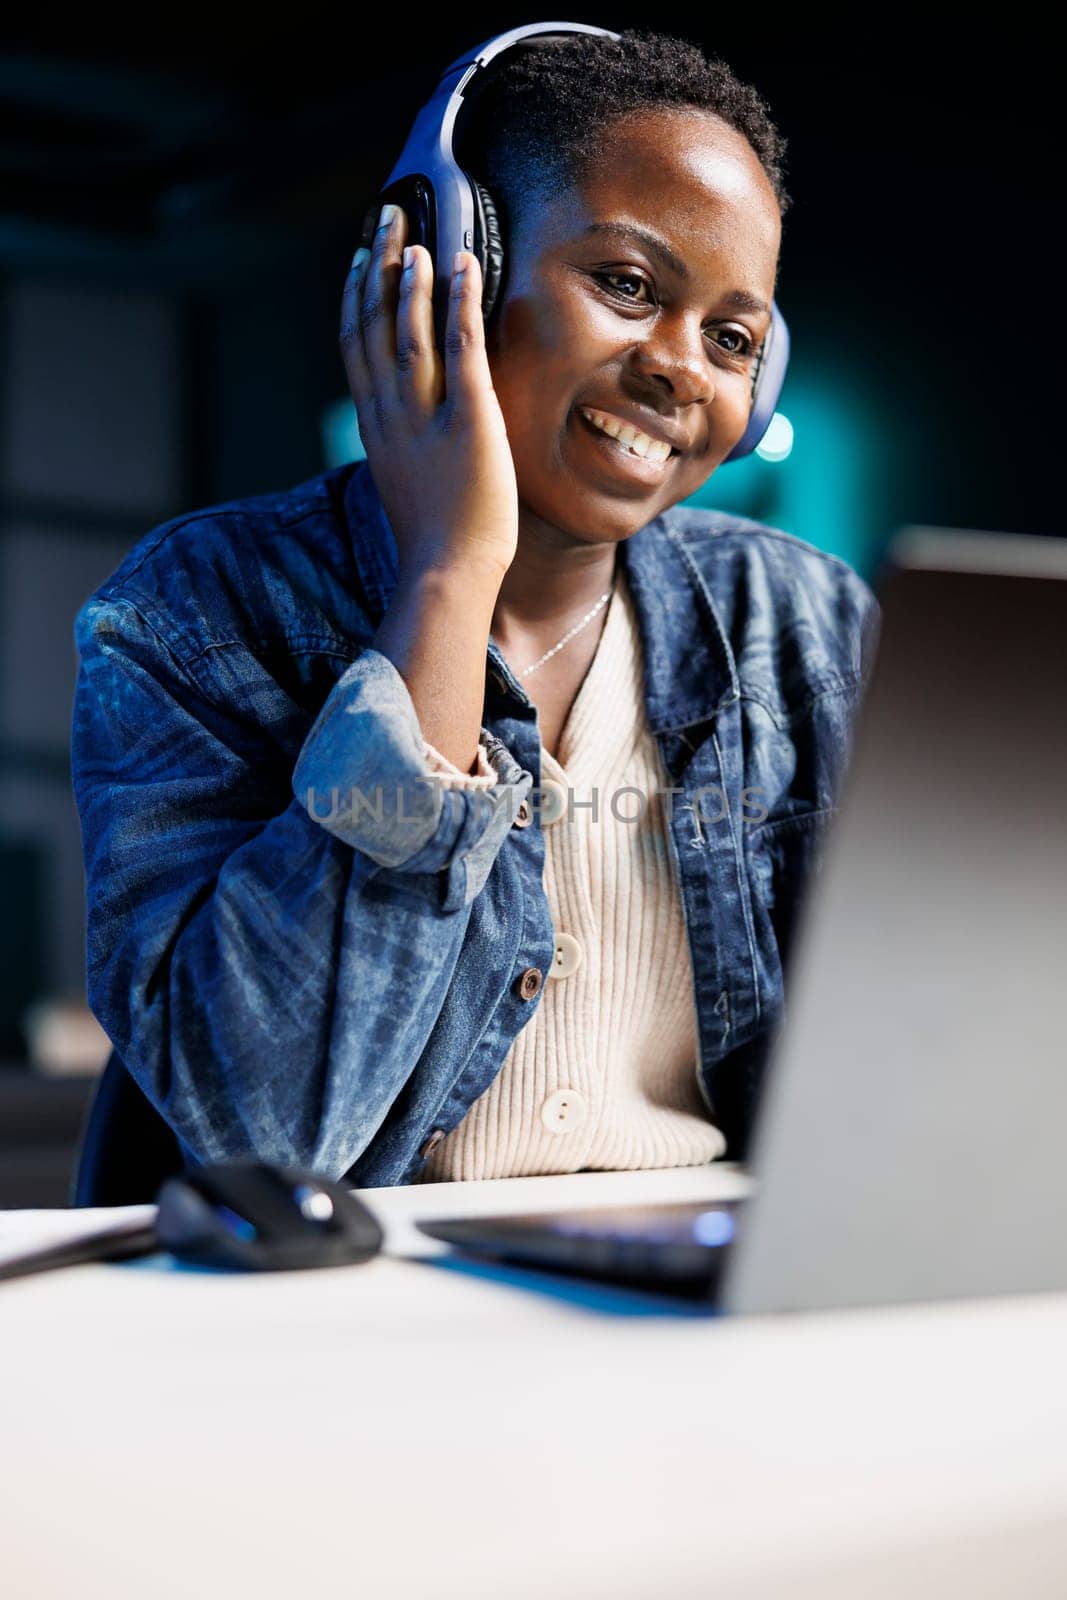 Woman joyfully uses laptop and headset by DCStudio